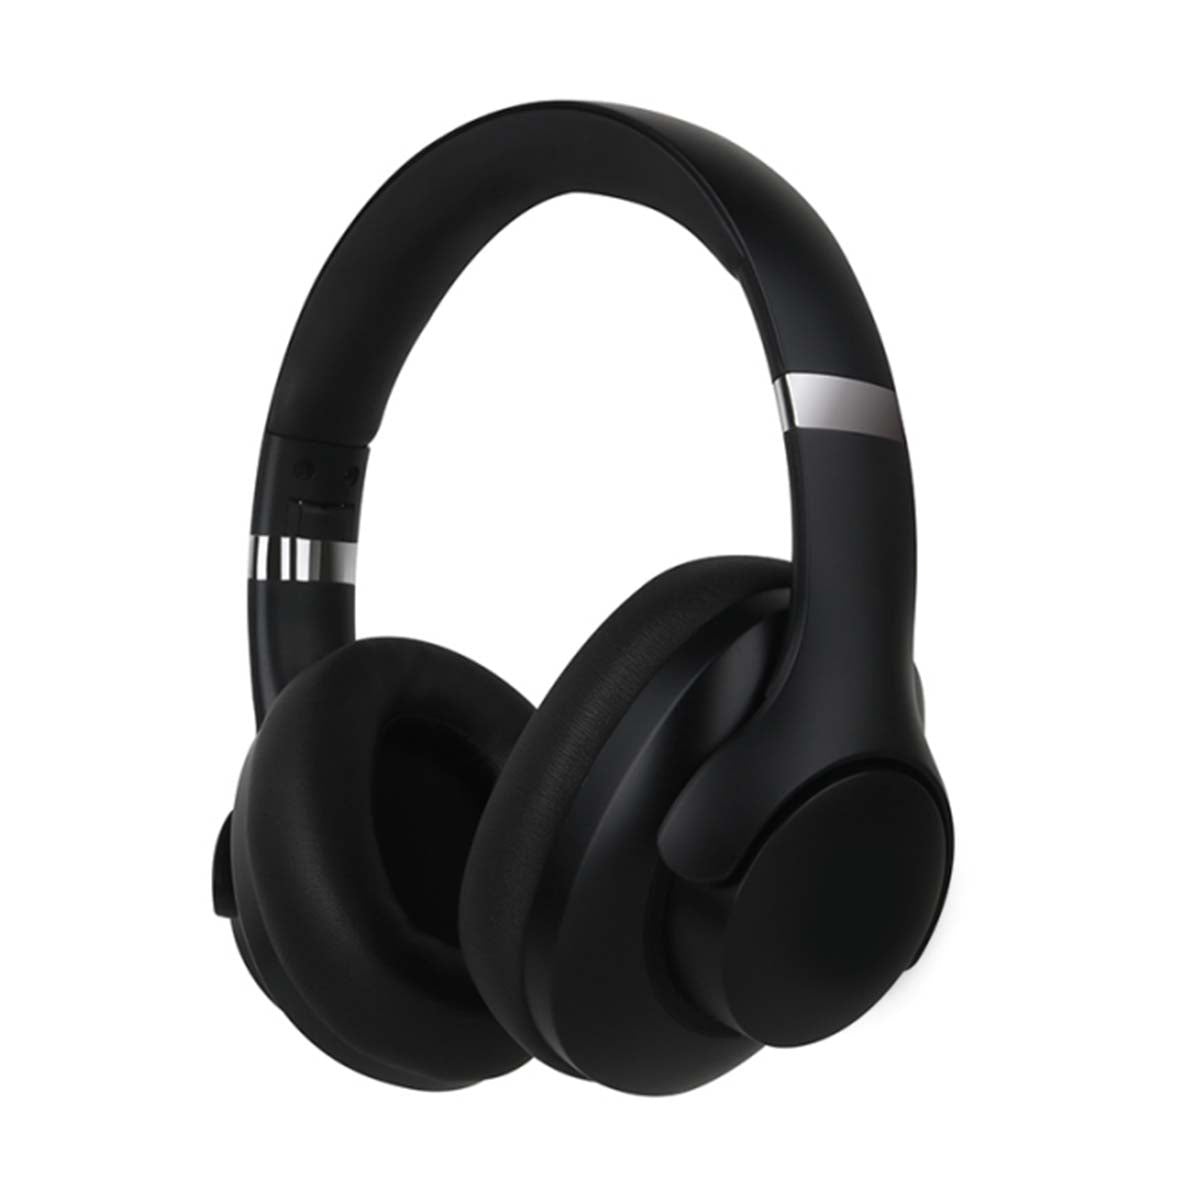 Kabelloses Headset mit Geräuschunterdrückung, kabellose Over-Ear-Bluetooth-Kopfhörer